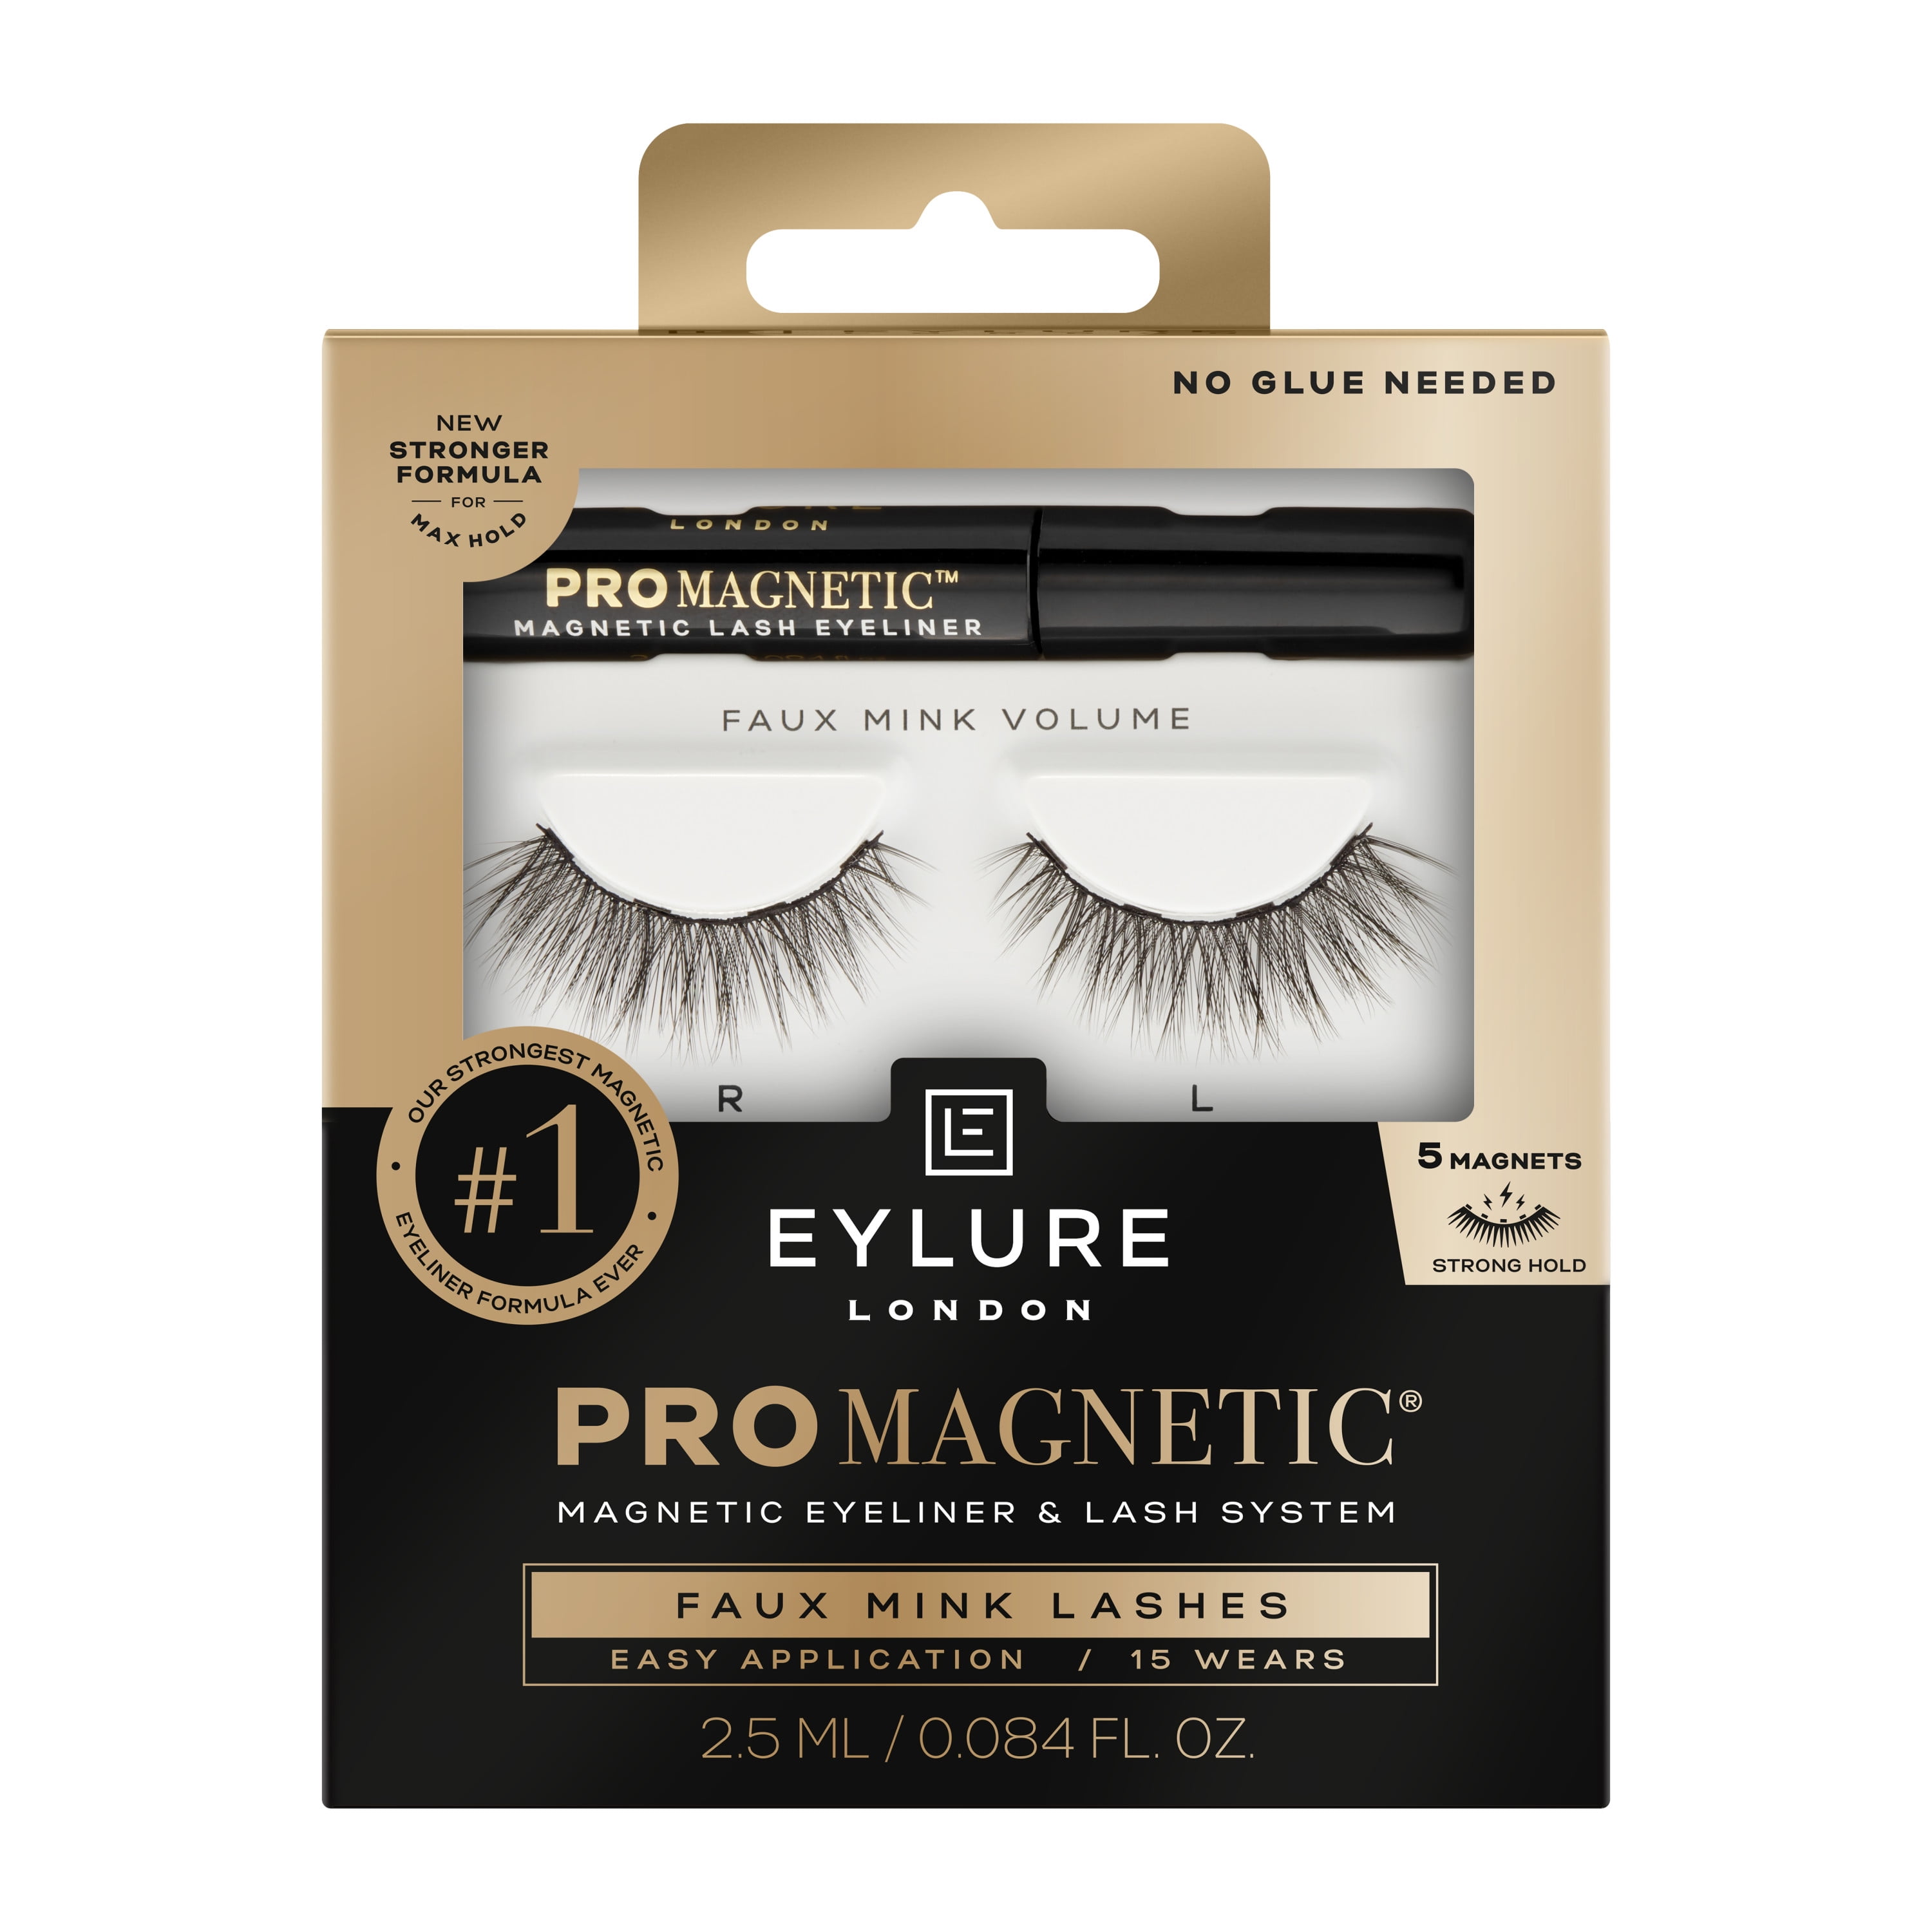 Eylure PROMAGNETIC Eyeliner & Lash Kit, Faux Mink Volume, Black